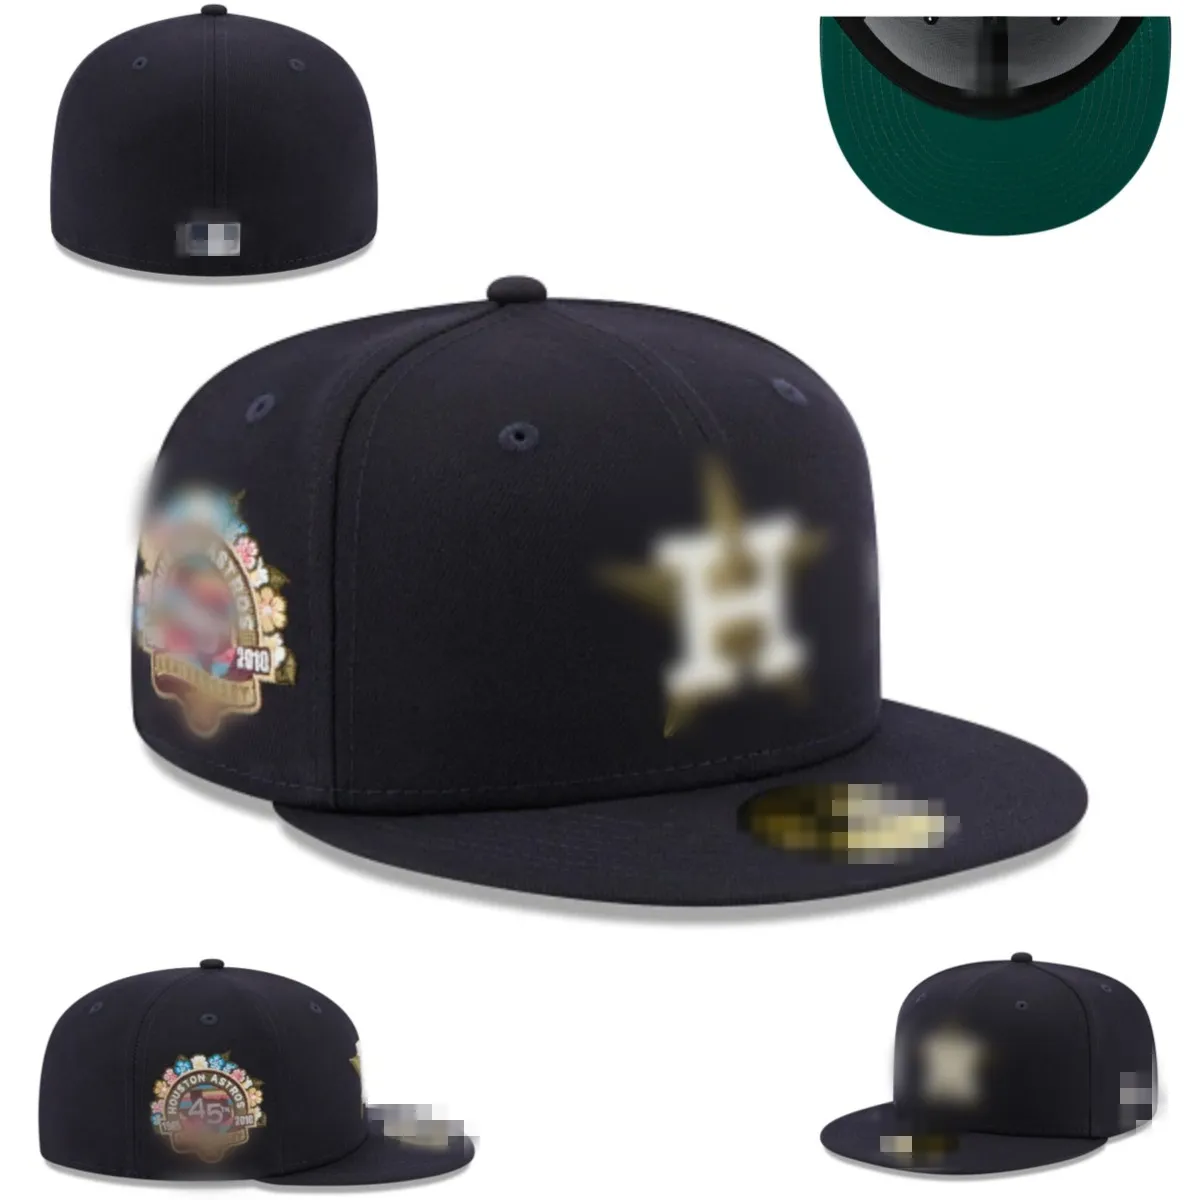 Männer ausgestattete Kappen Houston H Hip Hop -Größe Hats Baseball Caps Erwachsener flacher Peak für Männer Frauen voll geschlossen A3